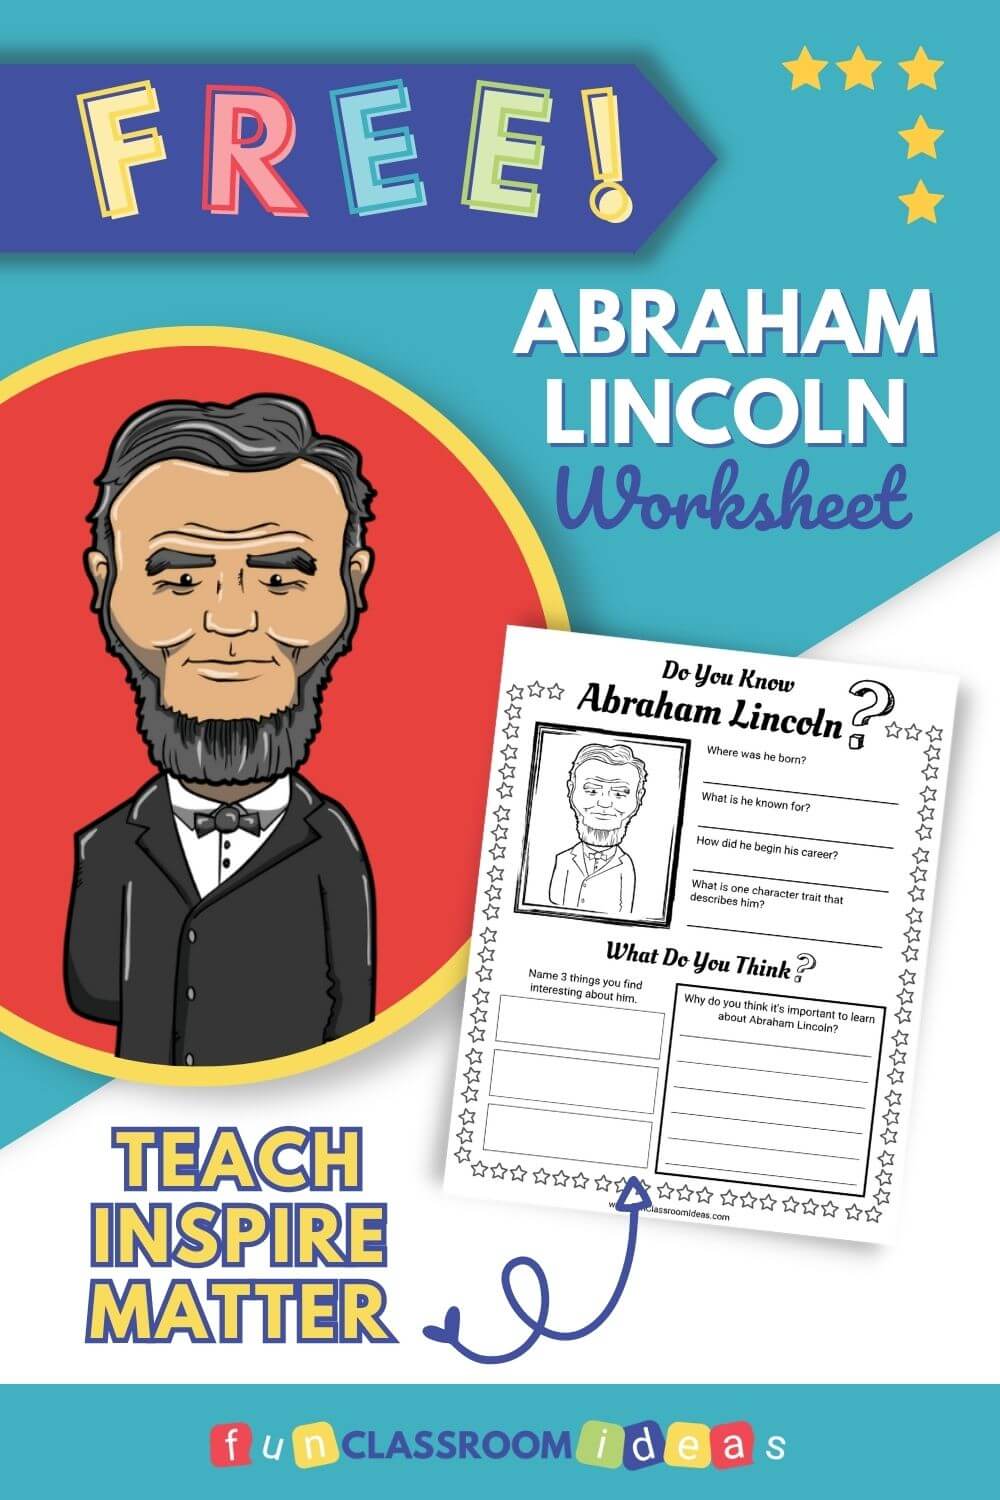 Abraham Lincoln worksheet free